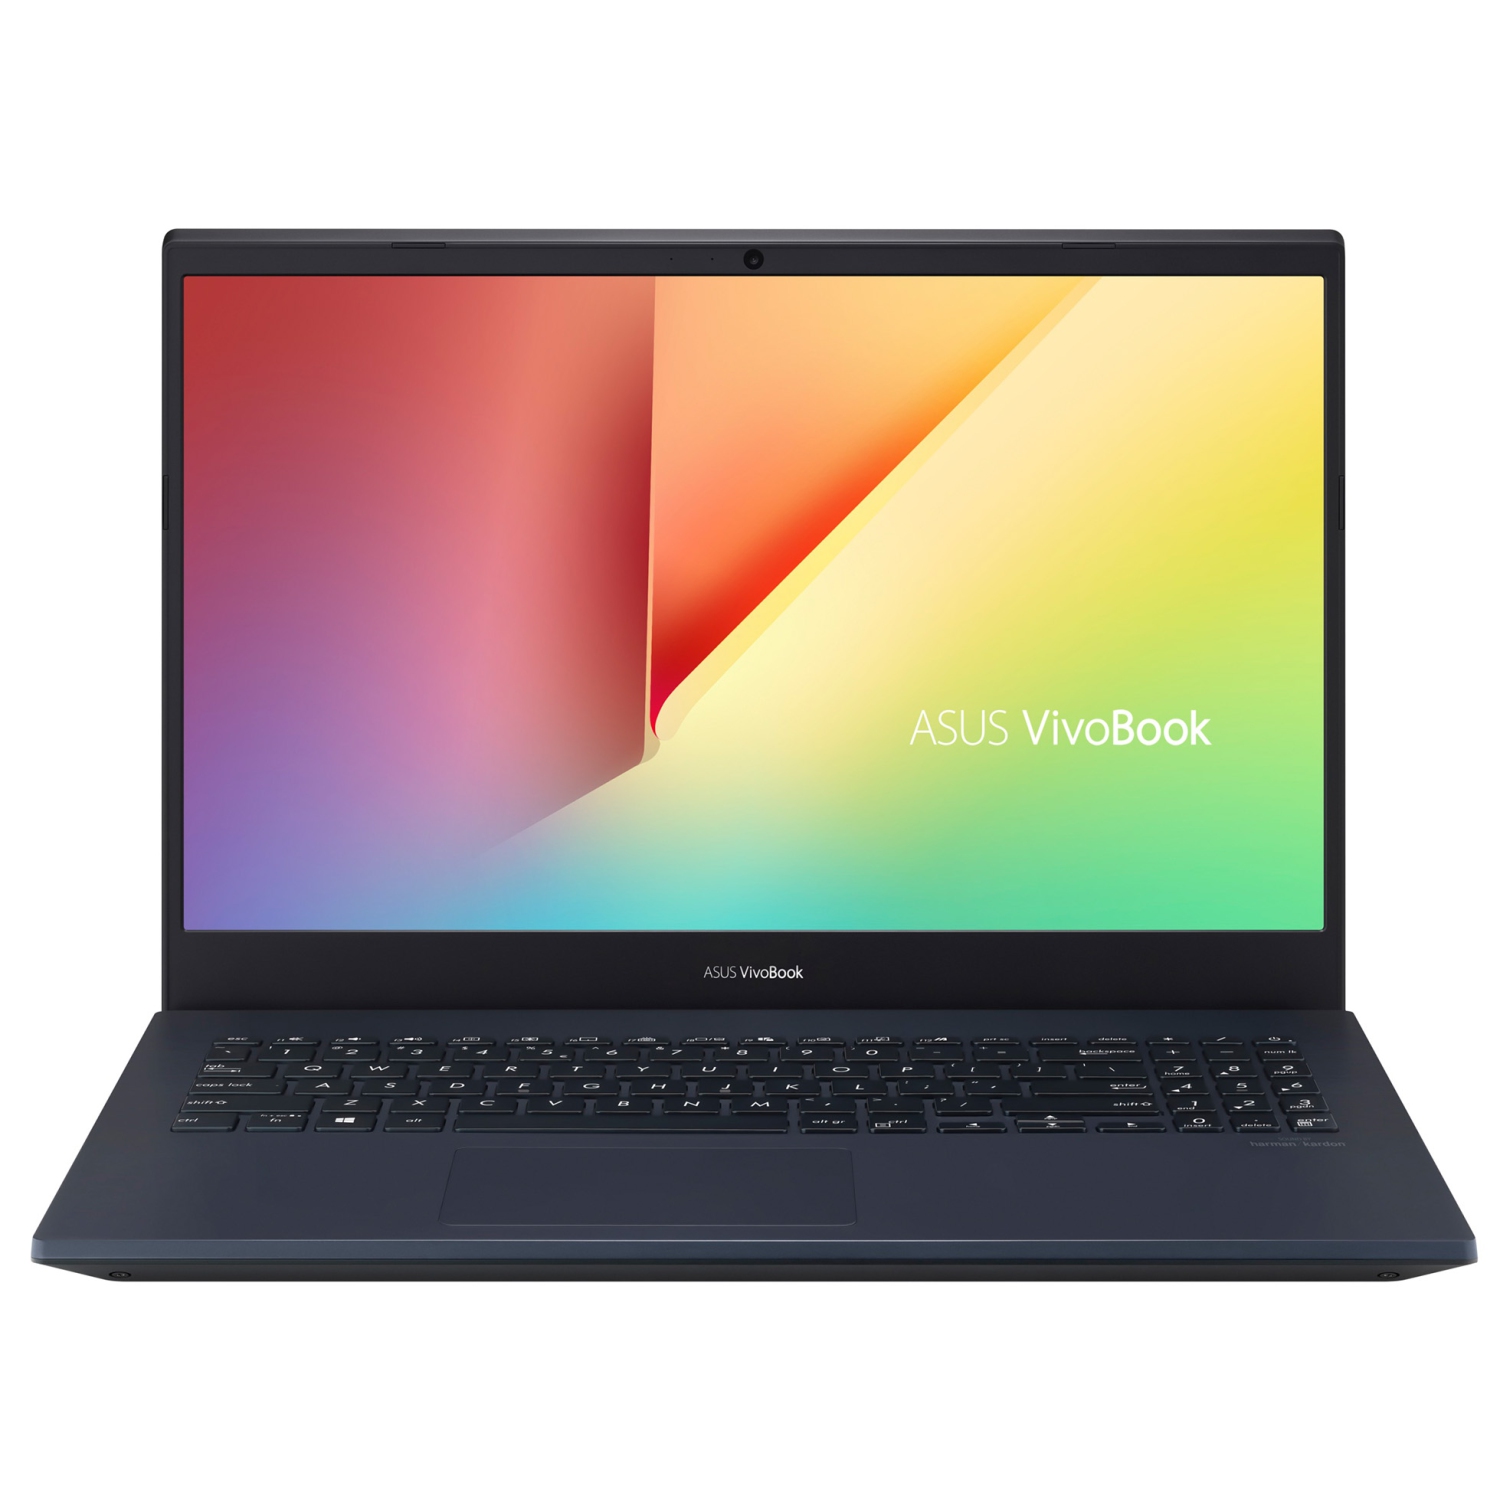 Custom ASUS VivoBook Laptop (Intel i5-10300H, 12GB RAM, 1TB PCIe SSD, NVIDIA GTX 1650, 15.6" Full HD (1920x1080), Win 10 Pro)